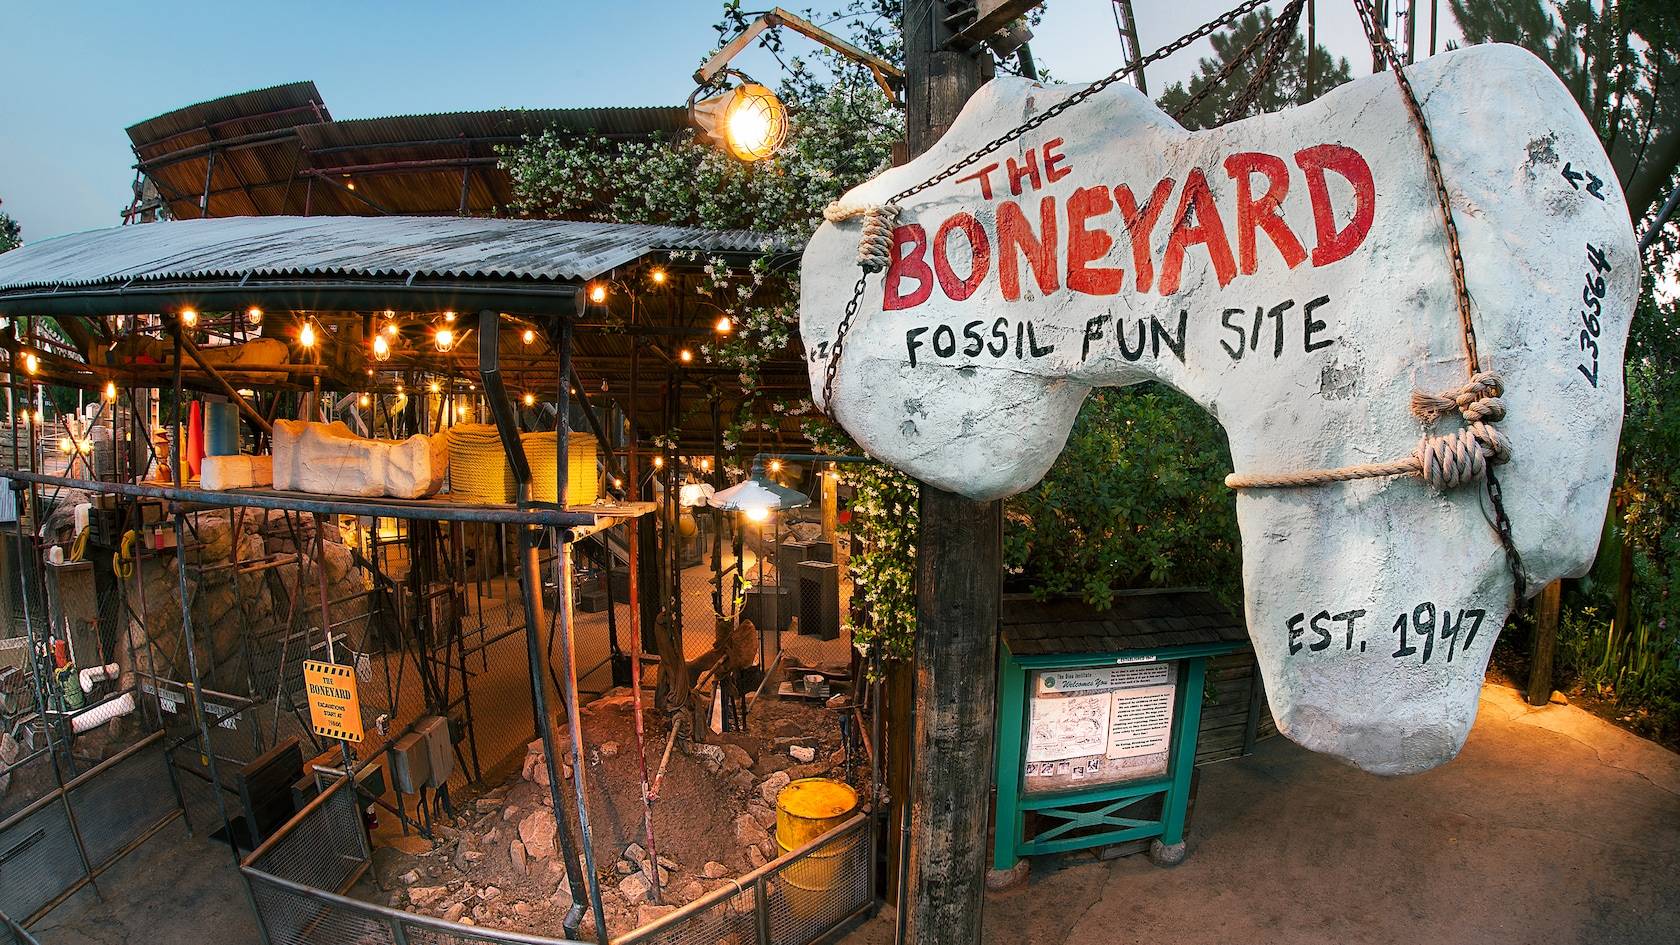 The Boneyard playground has reopened at Disney's Animal Kingdom